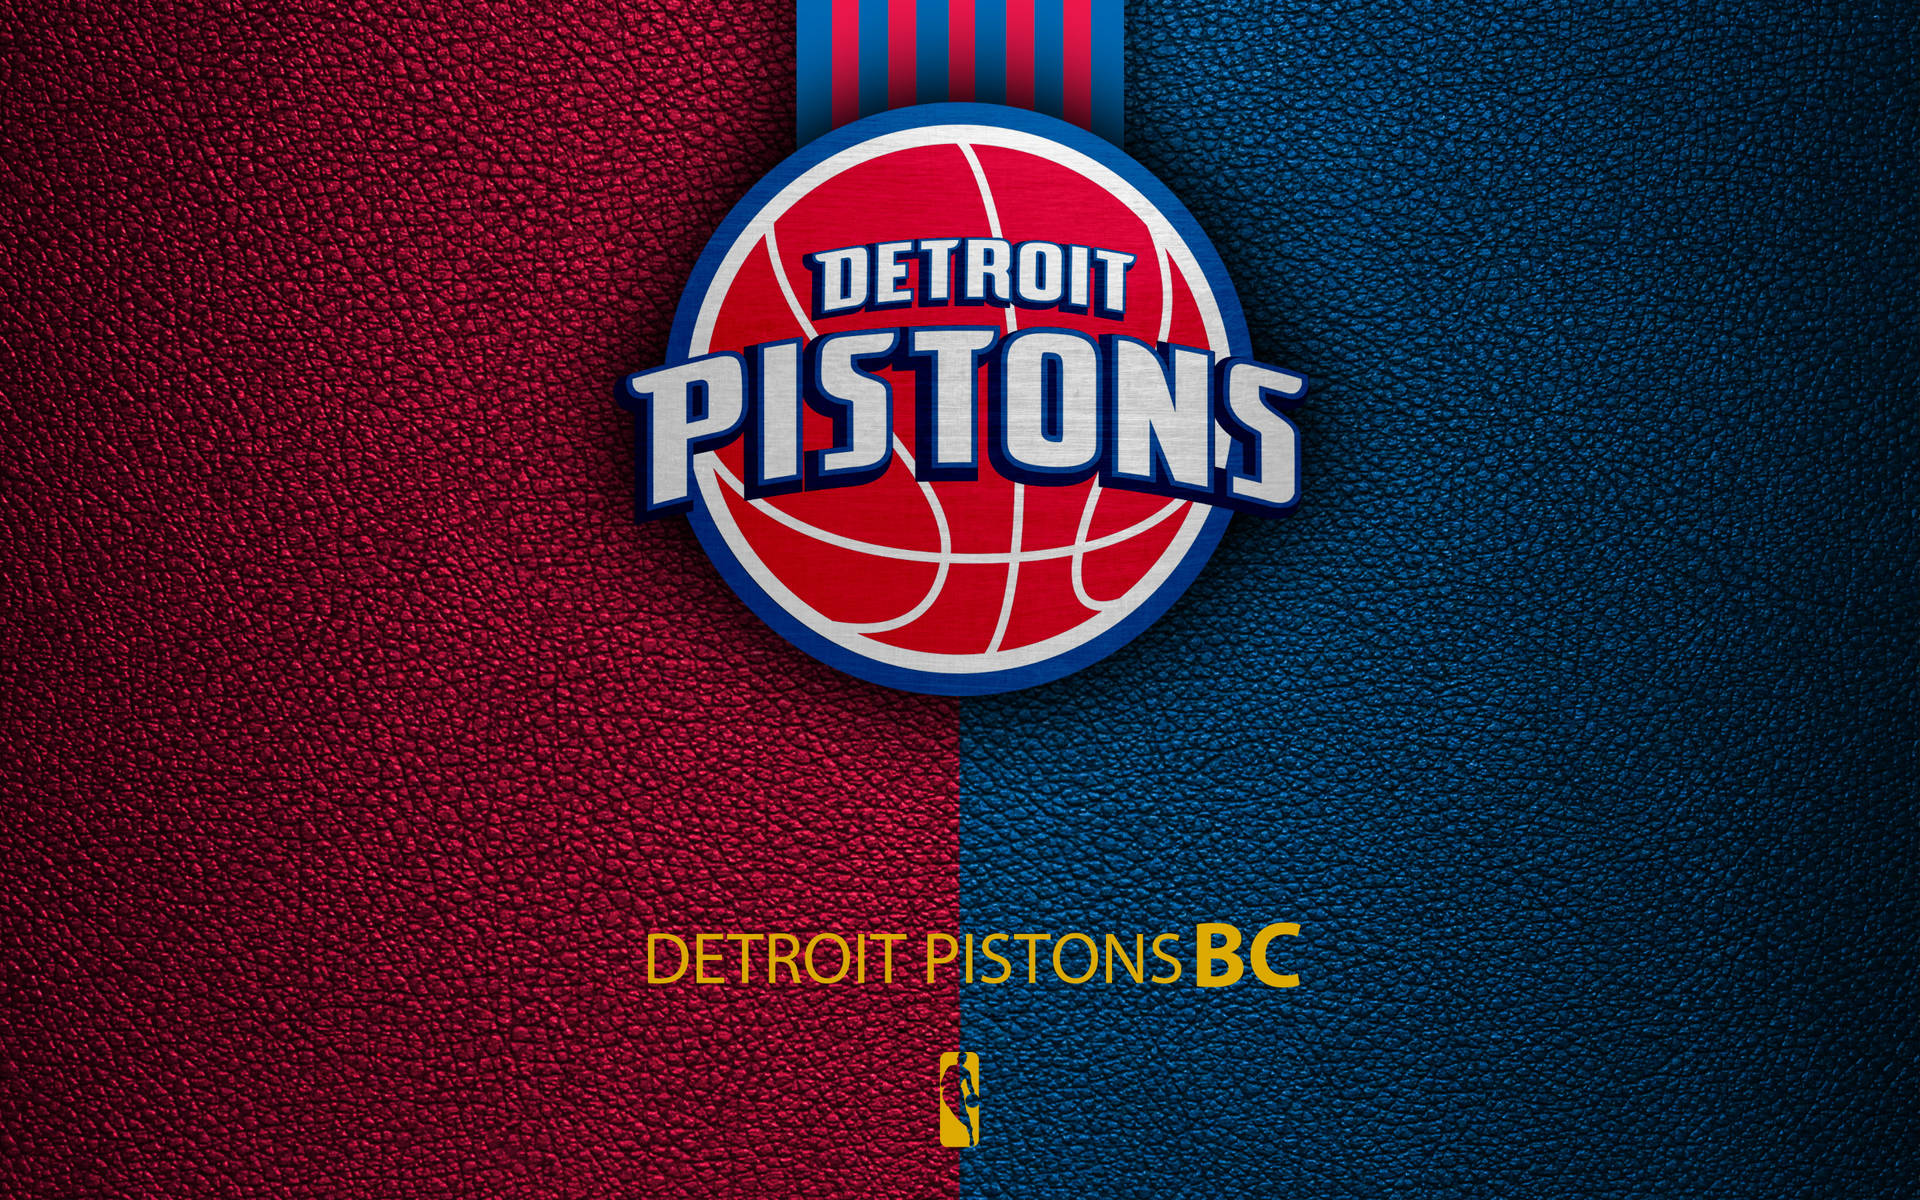 Detroit Pistons Textured Logo Background